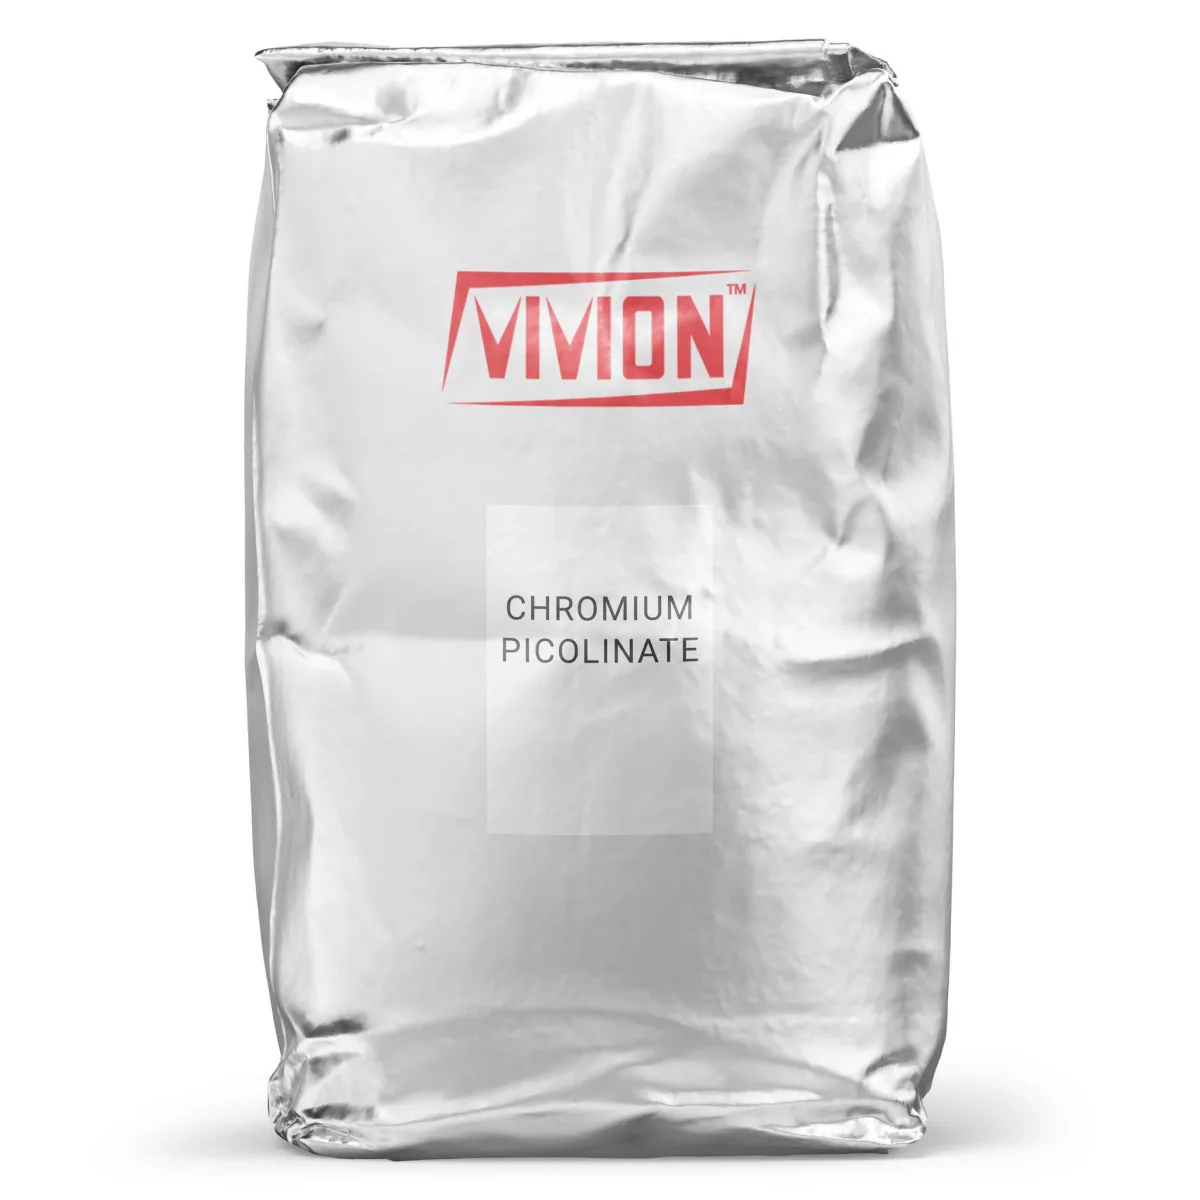 Bag of Vivion's wholesale Chromium Picolinate.